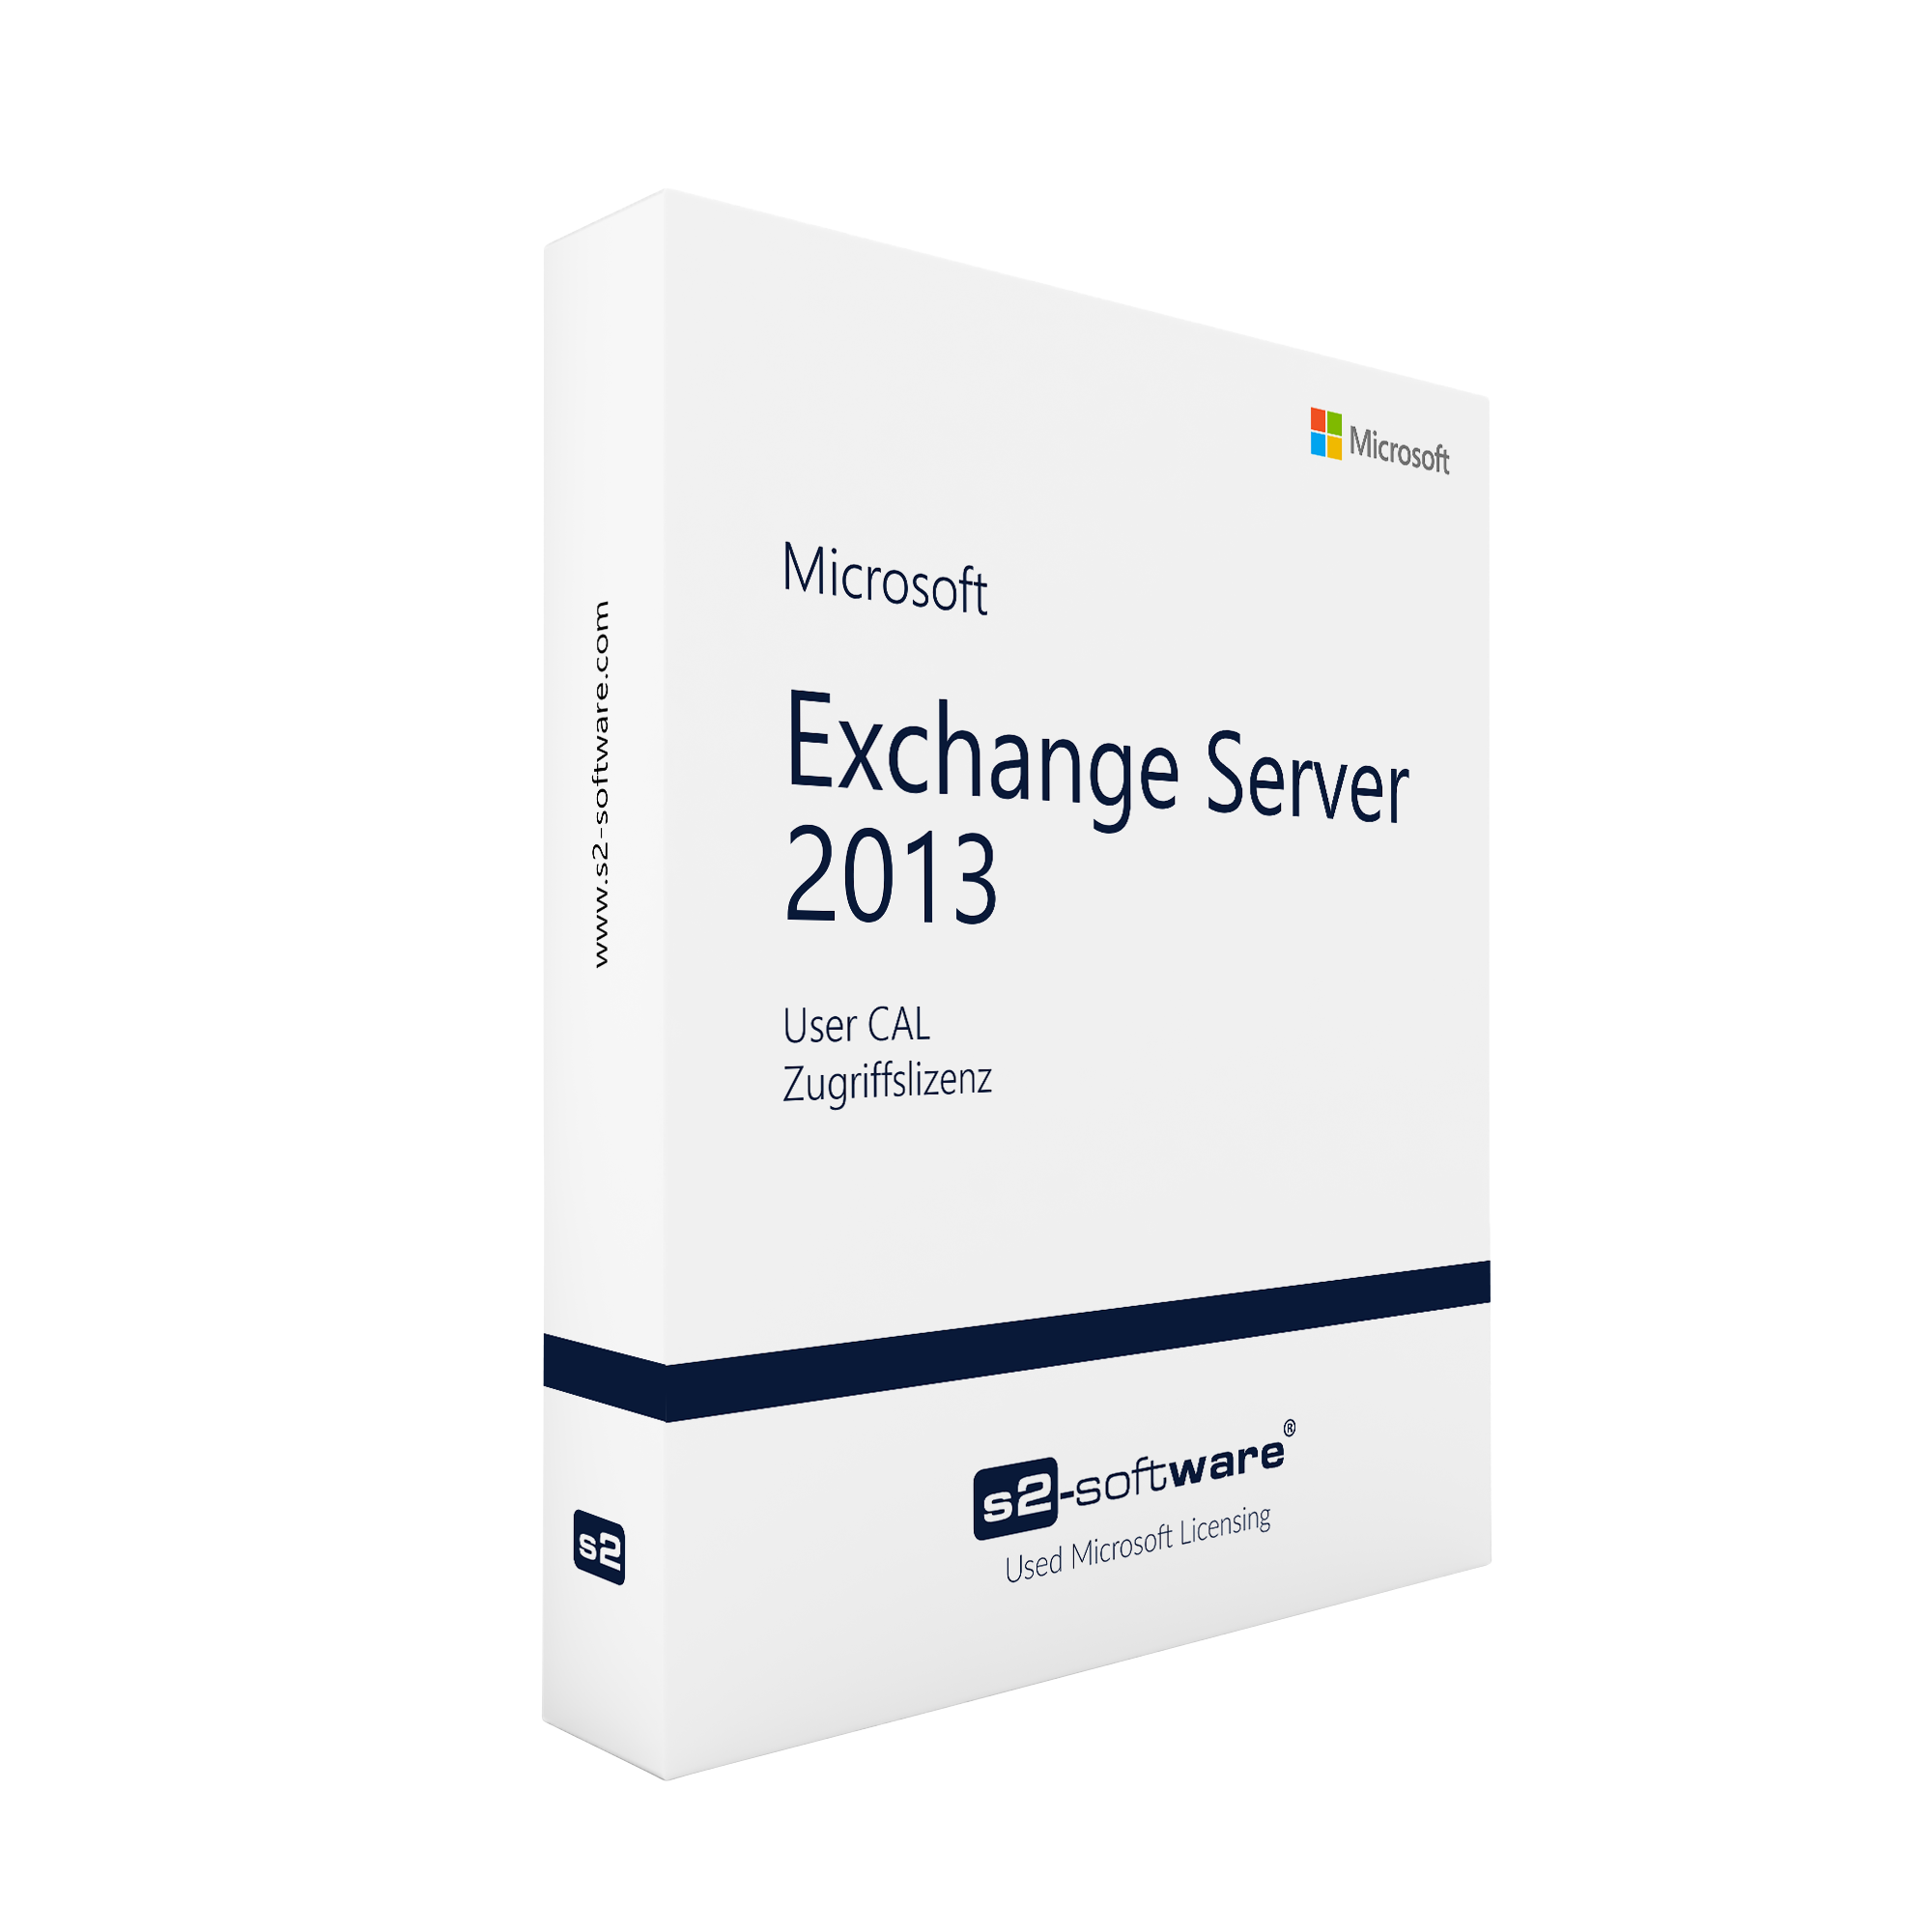 Exchange Server 2013 User CAL